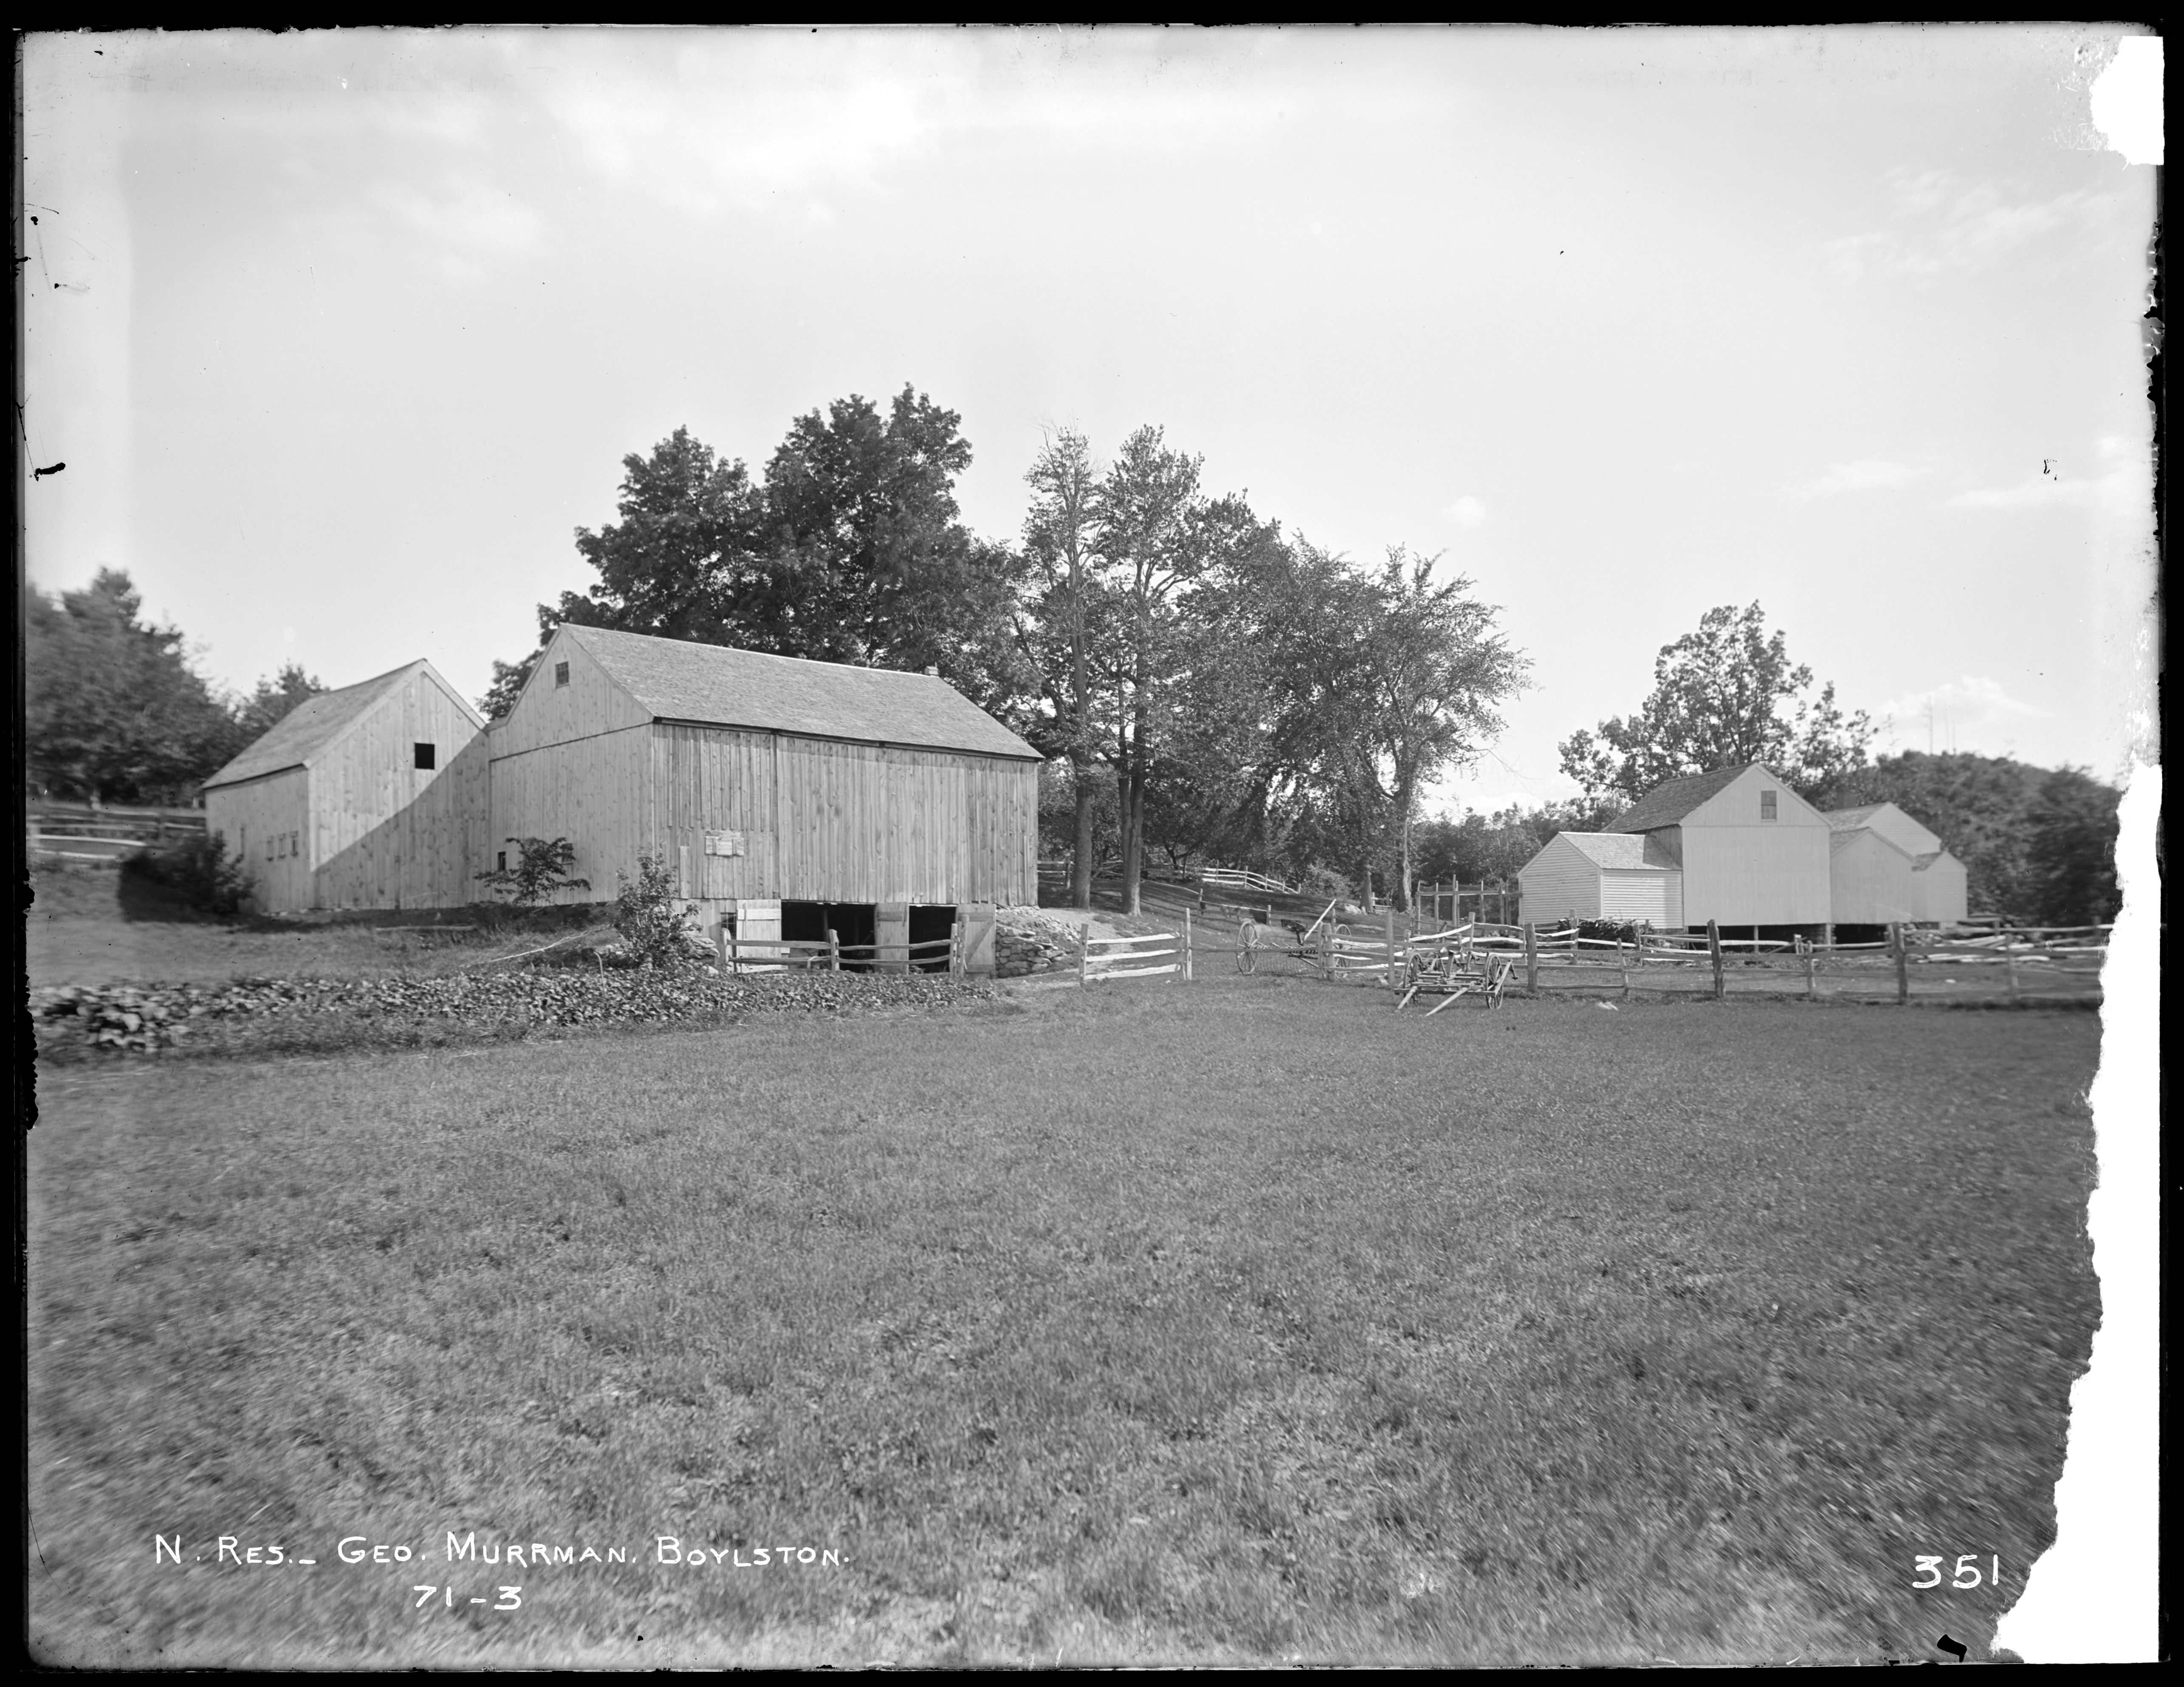 George Murrman's Barn